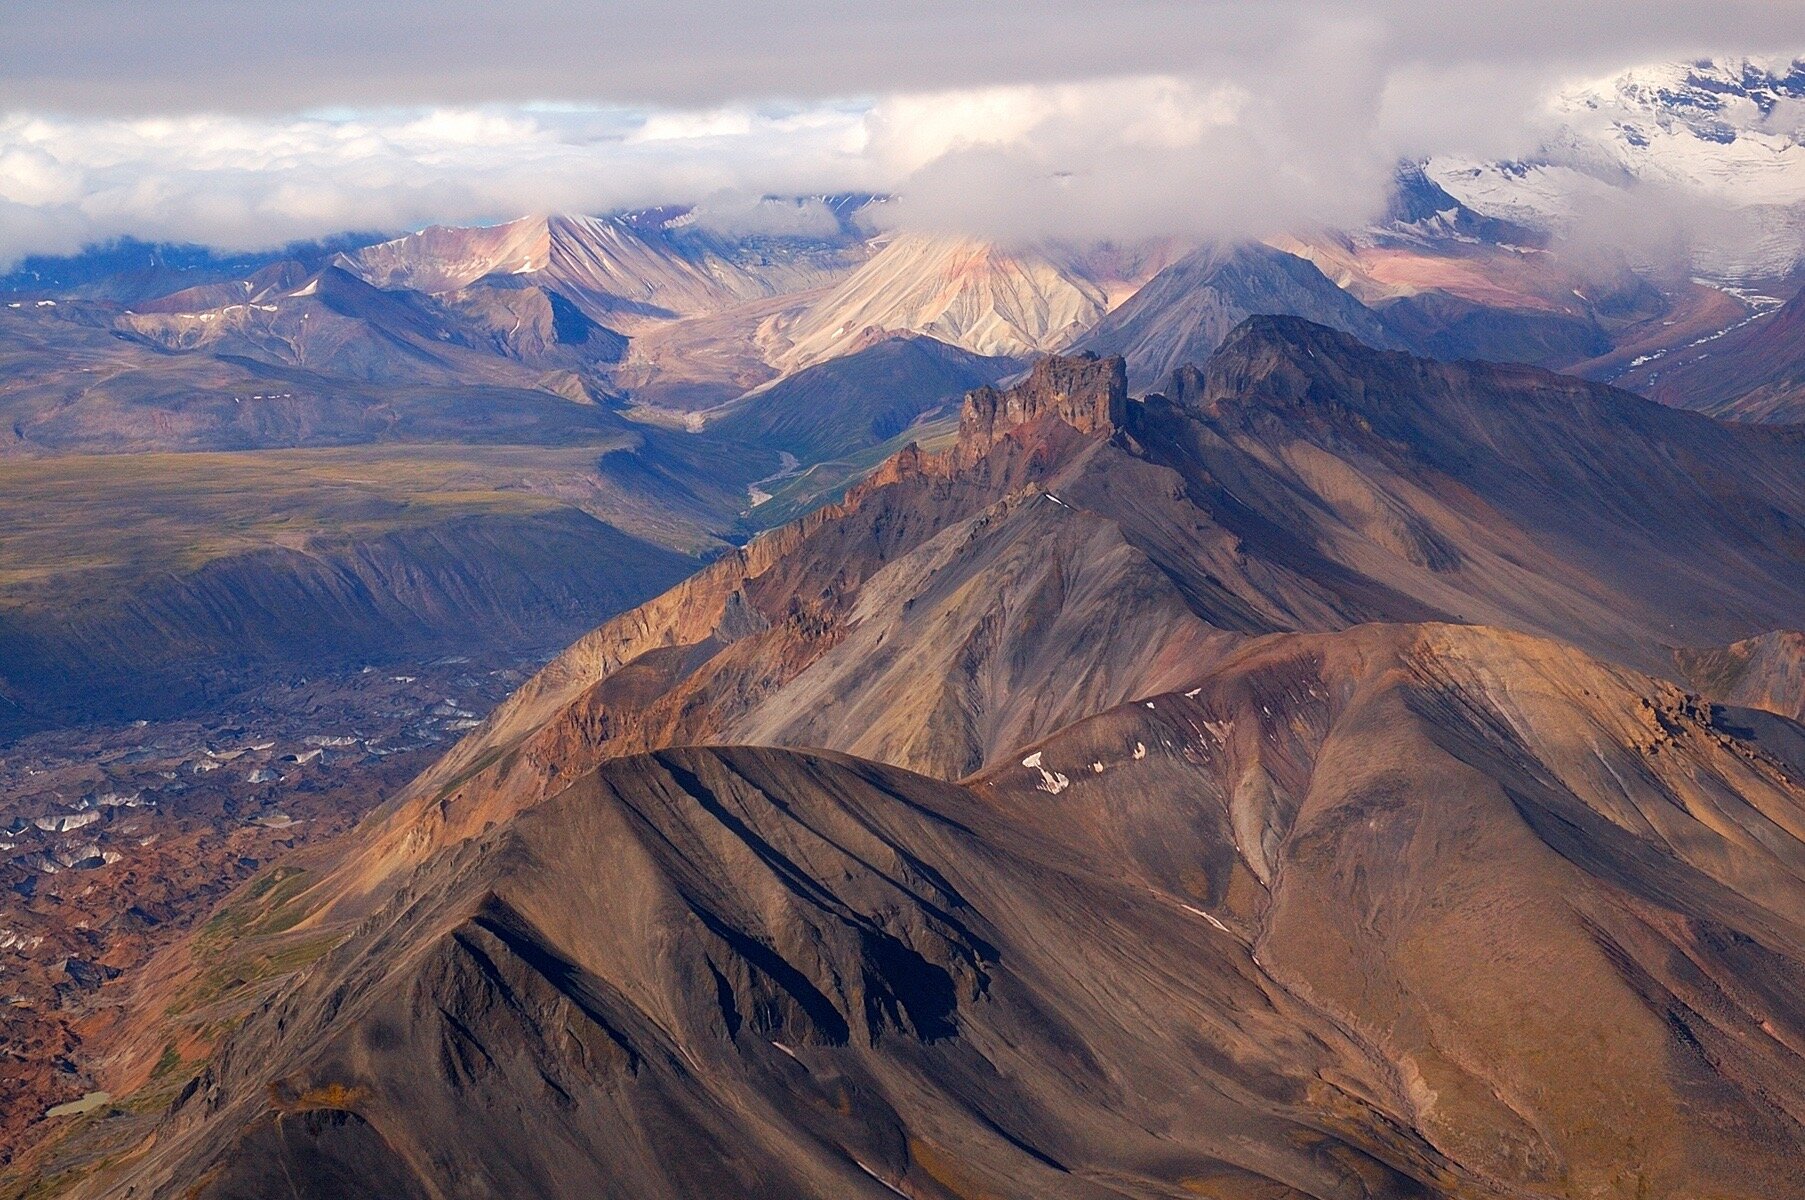 Wrangell-St. Elias National Park and Preserve includes especially high mountains of volcanic origin.